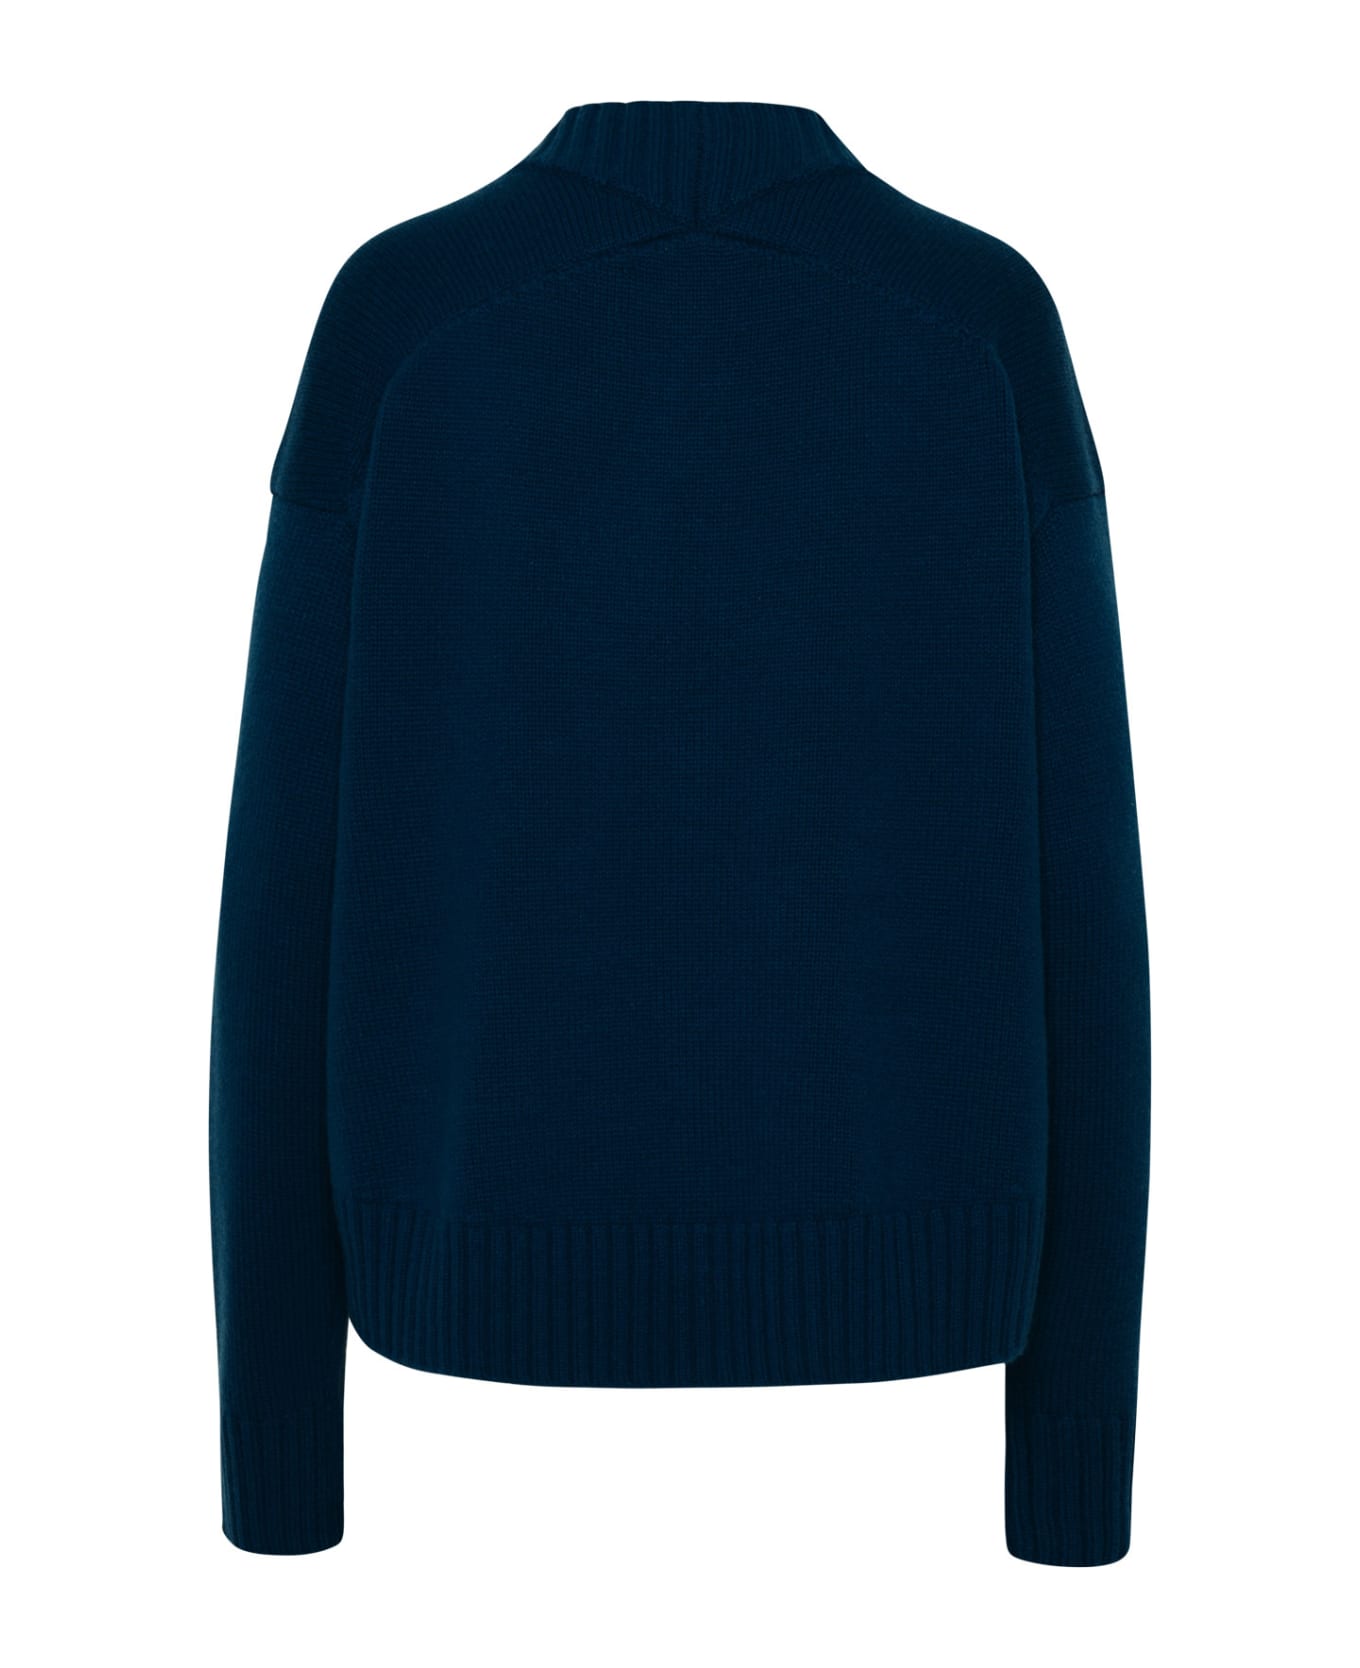 Jil Sander Sweater In Blue Cashmere Blend - Blue